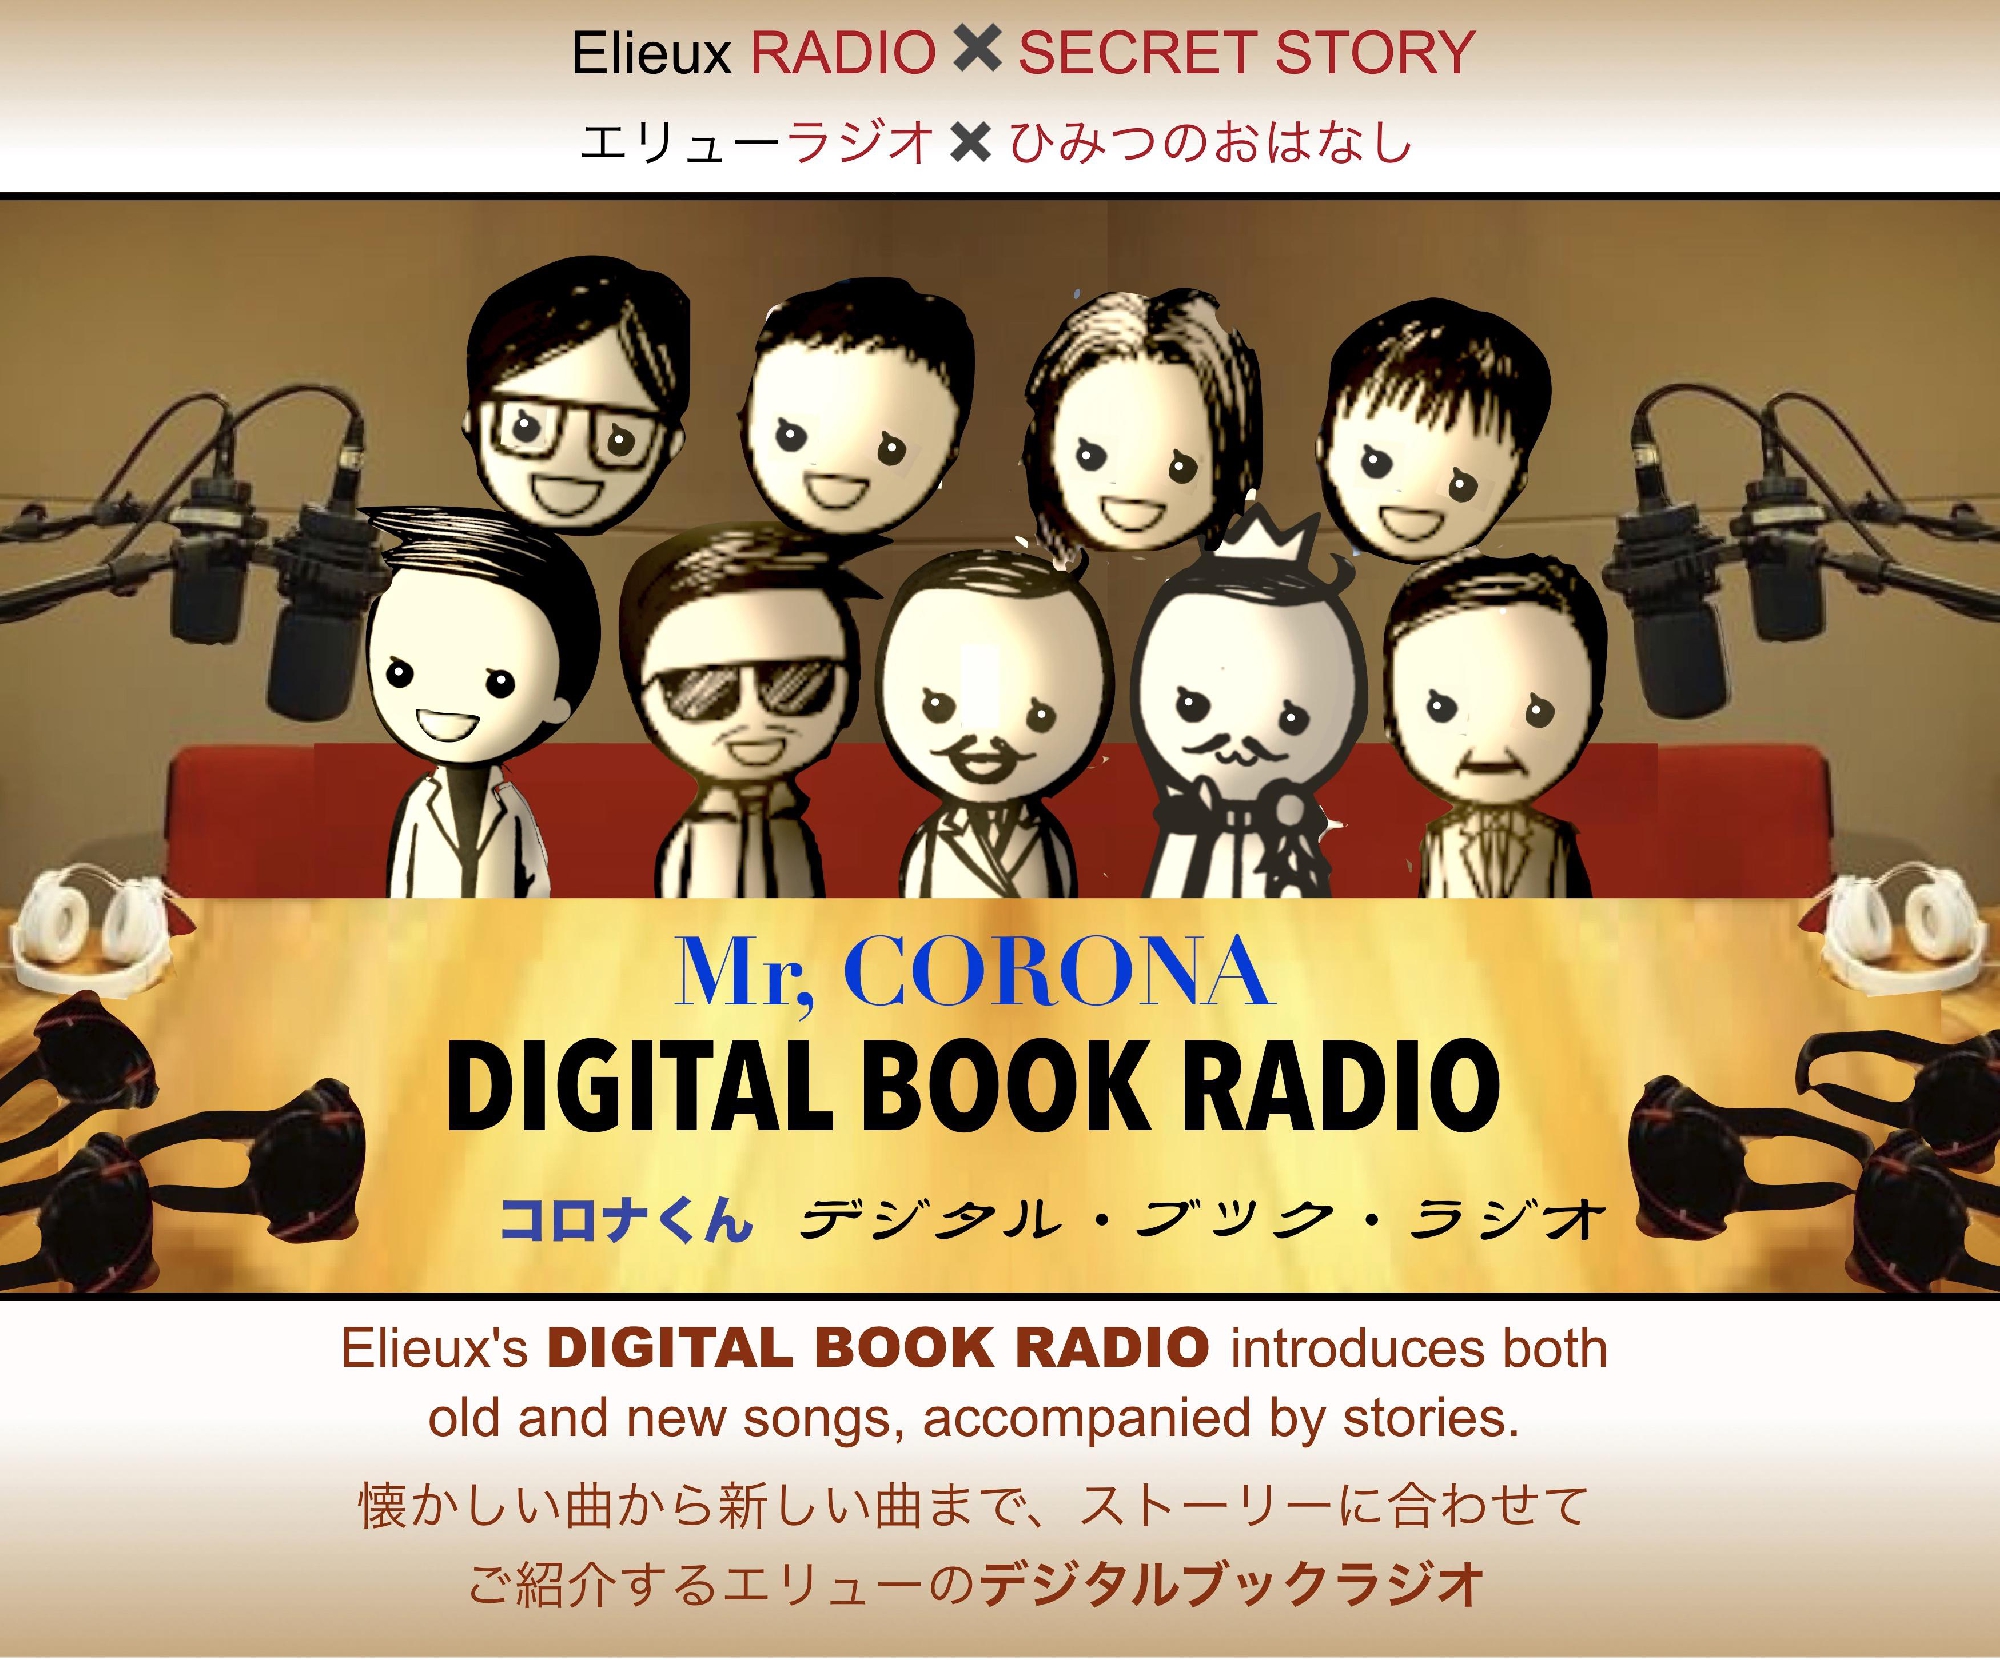 DIGITAL BOOK RADIO "Mr. Corona" 「コロナくん」デジタルブックラジオ